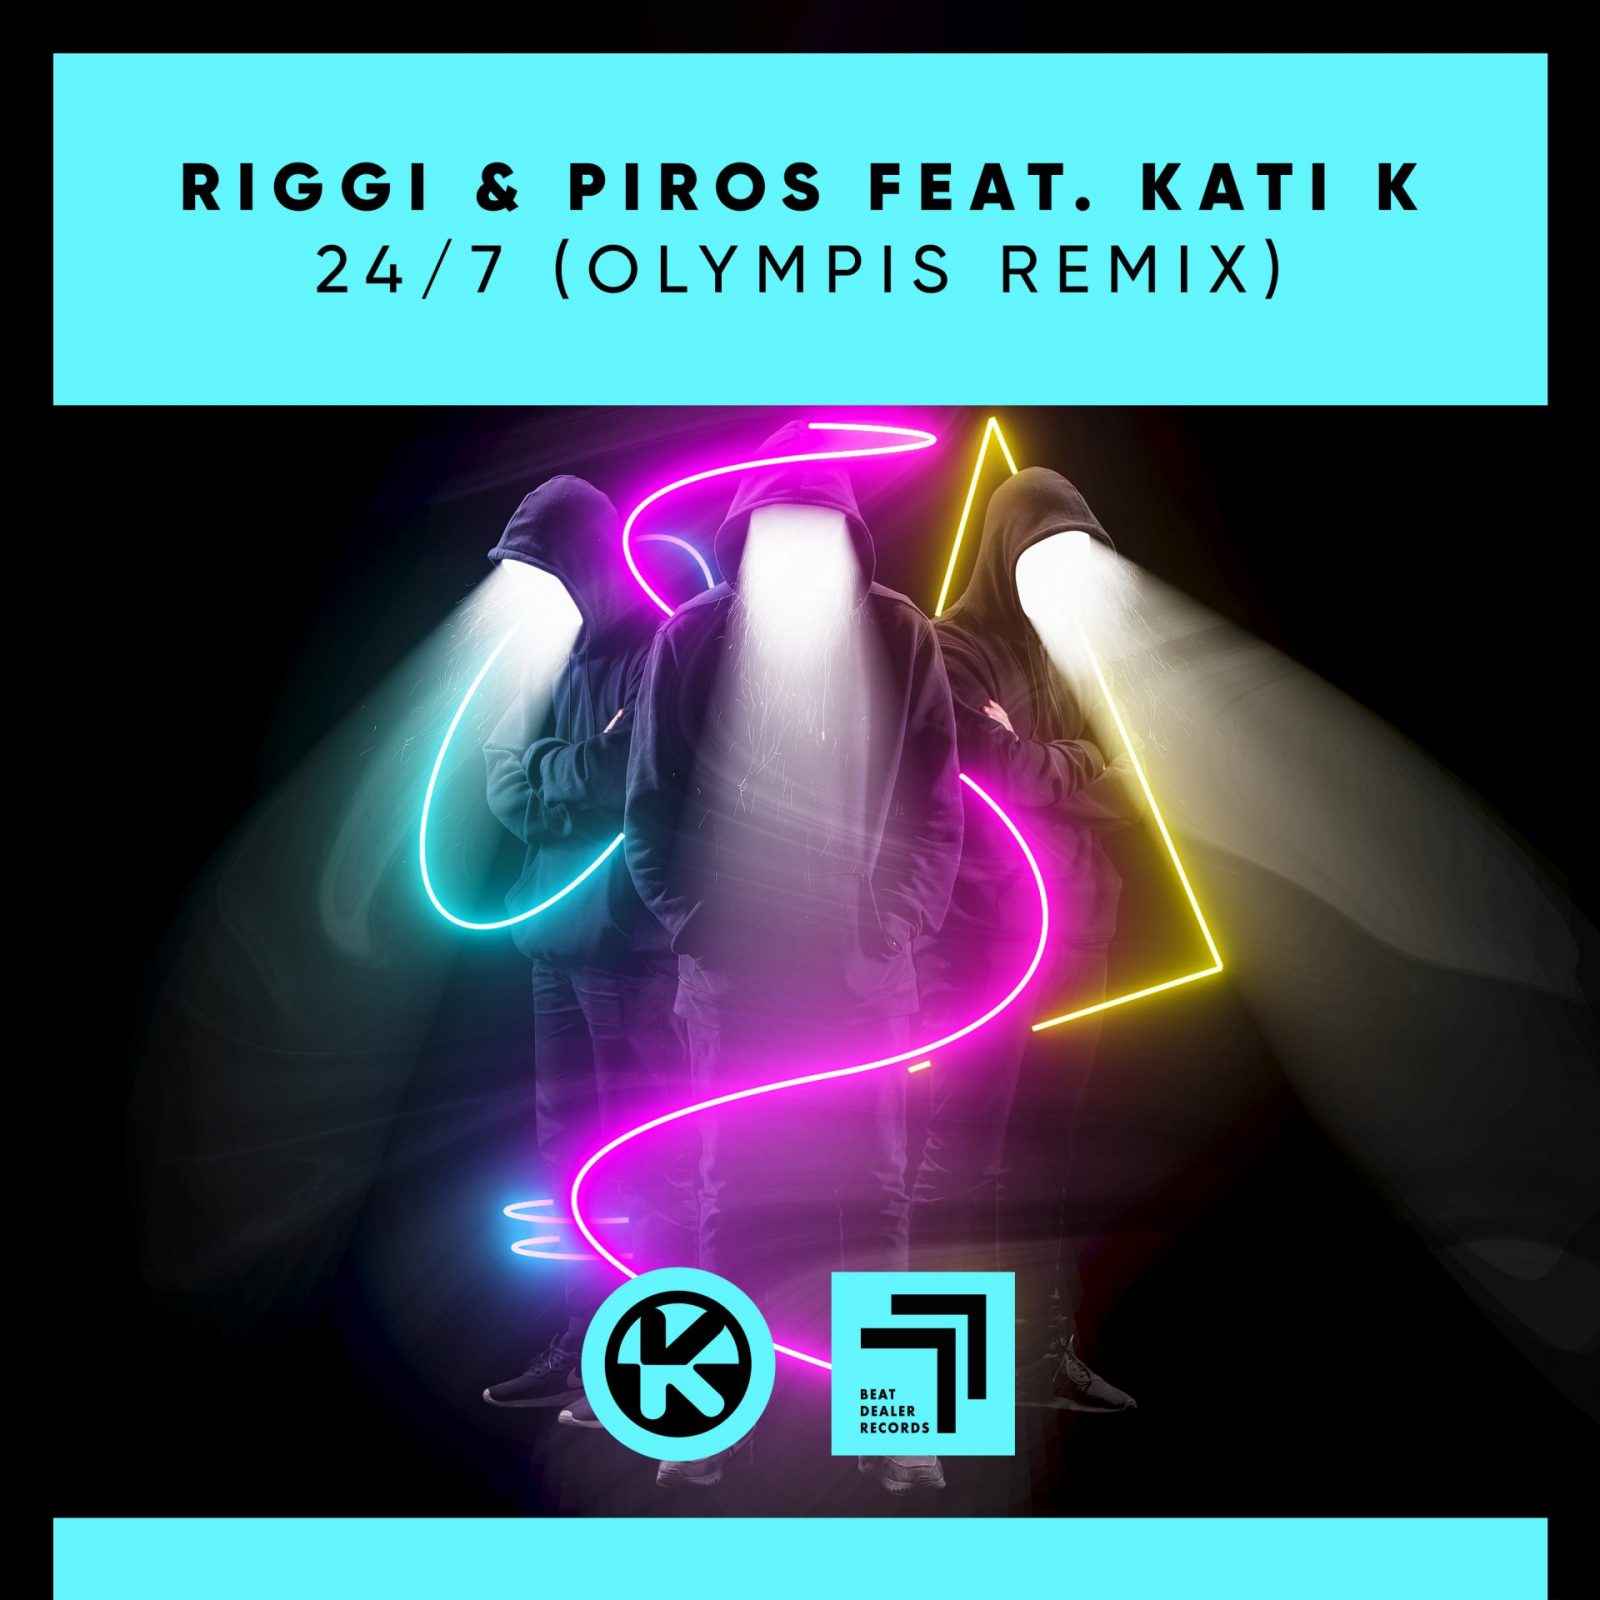 Riggi & Piros feat. Kati K - 24/7 (Olympis Remix)